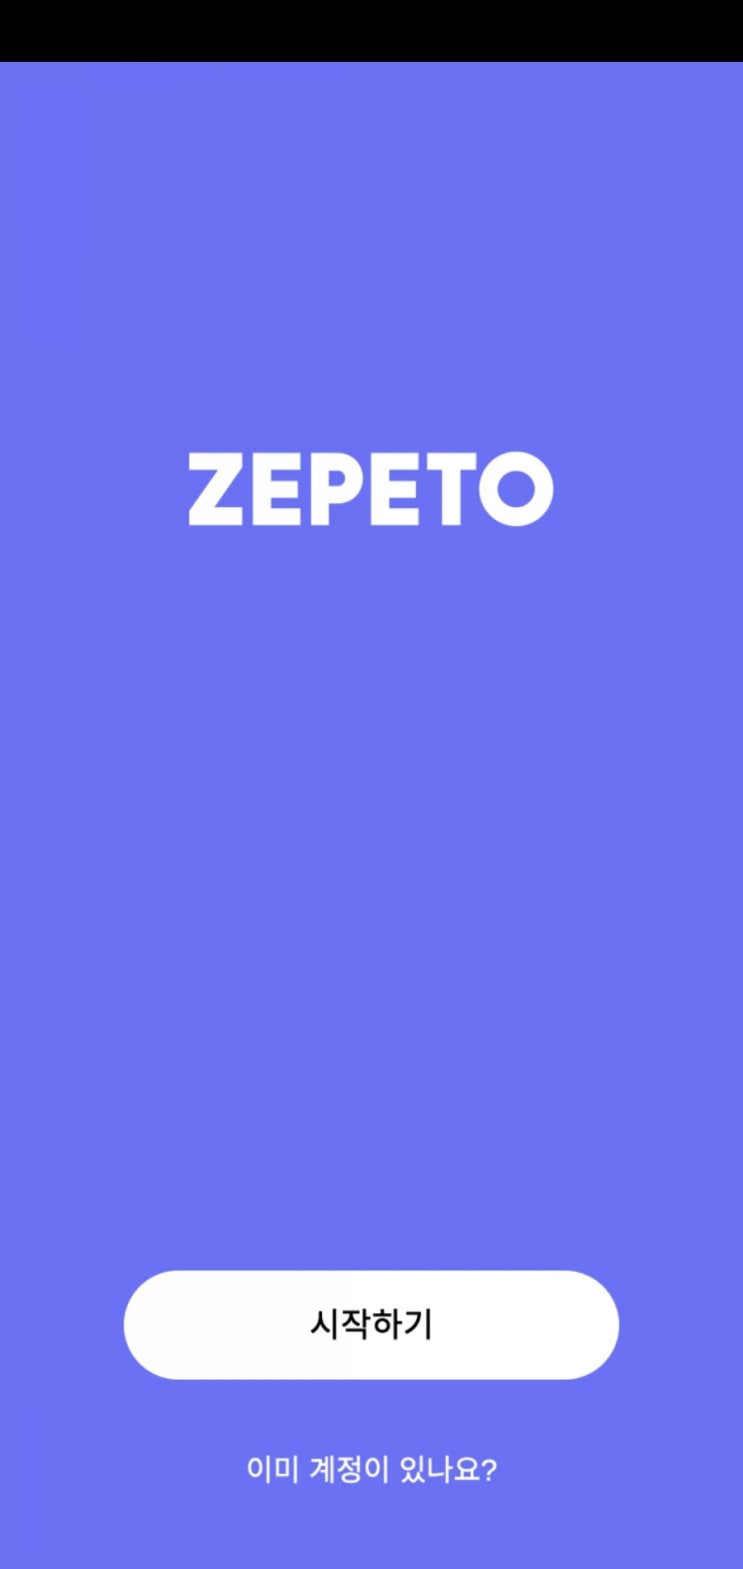 [ZEPETO] 나만의 3D 캐릭터 만들기 / 제페토 / 스노우